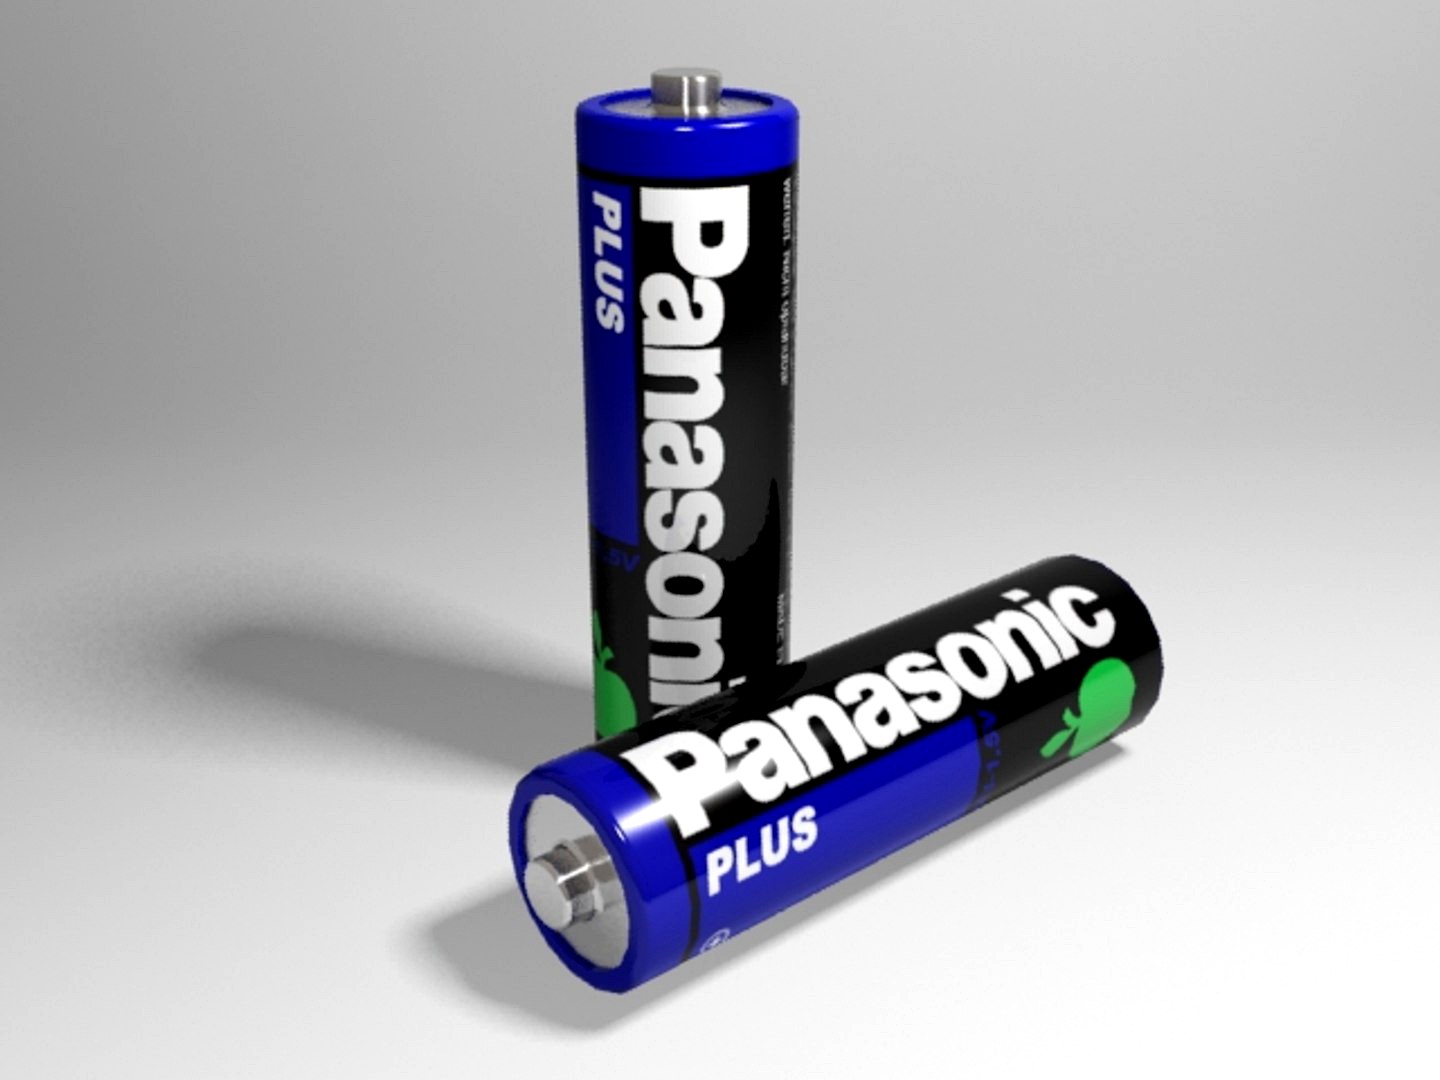 Panasonic battery